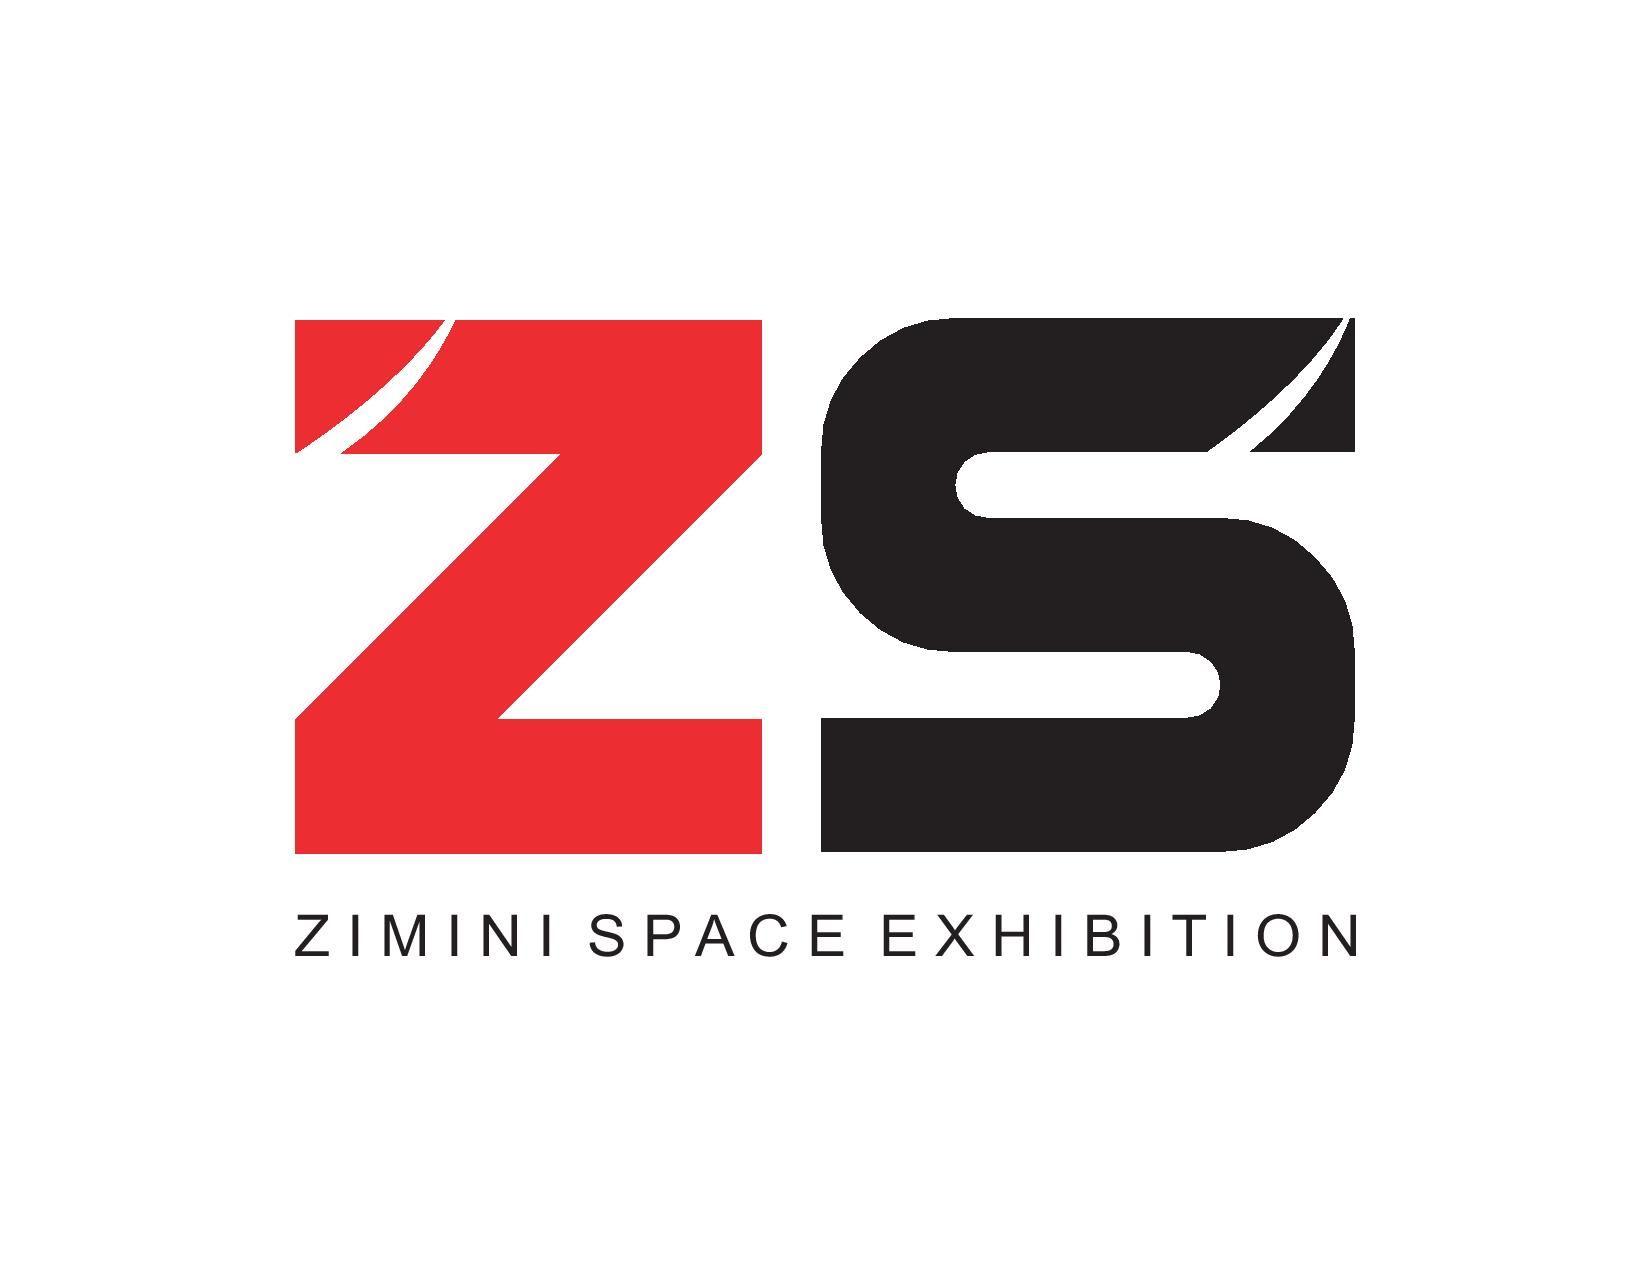 ZIMINI SPACE EXHIBITION (OPC) PVT. LTD.